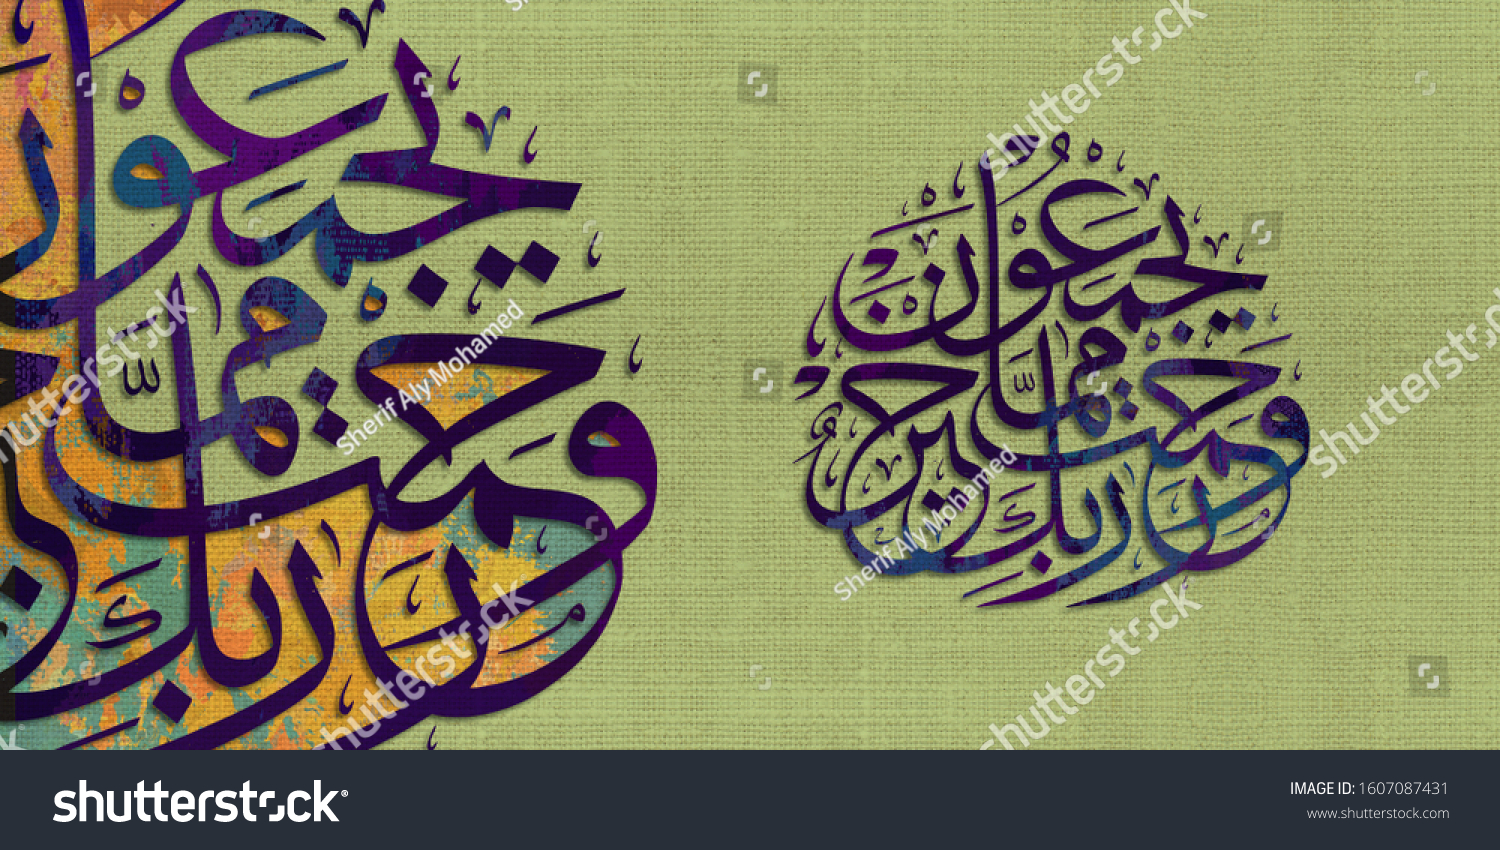 Arabic Calligraphy Islamic Calligraphy Verse Quran Stock Illustration